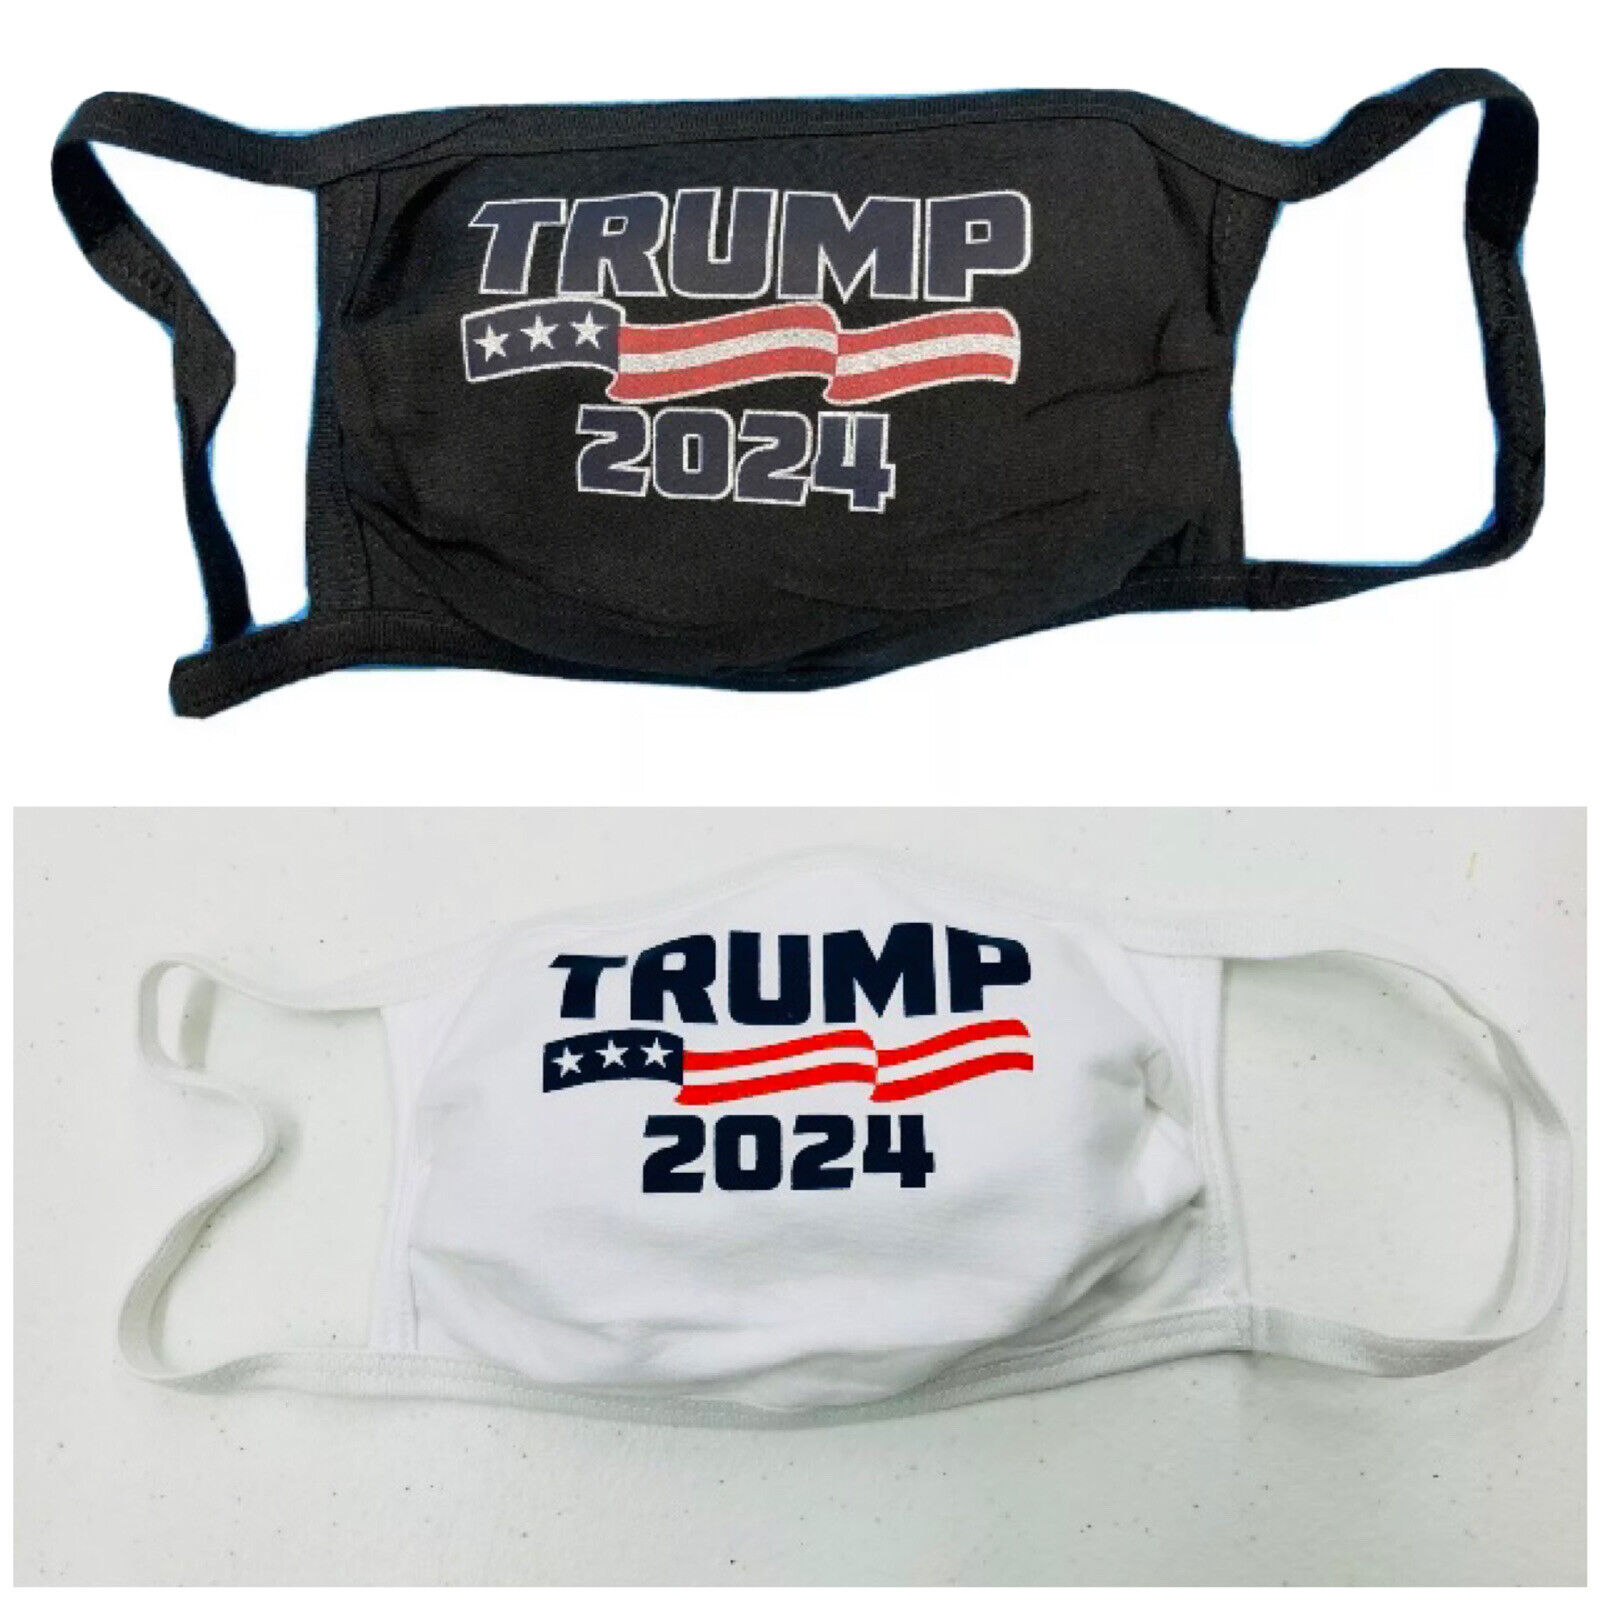 2 Pieces USA Made President Donald Trump 2024 Reusable Cotton Face Mask Cover SKULL STORE